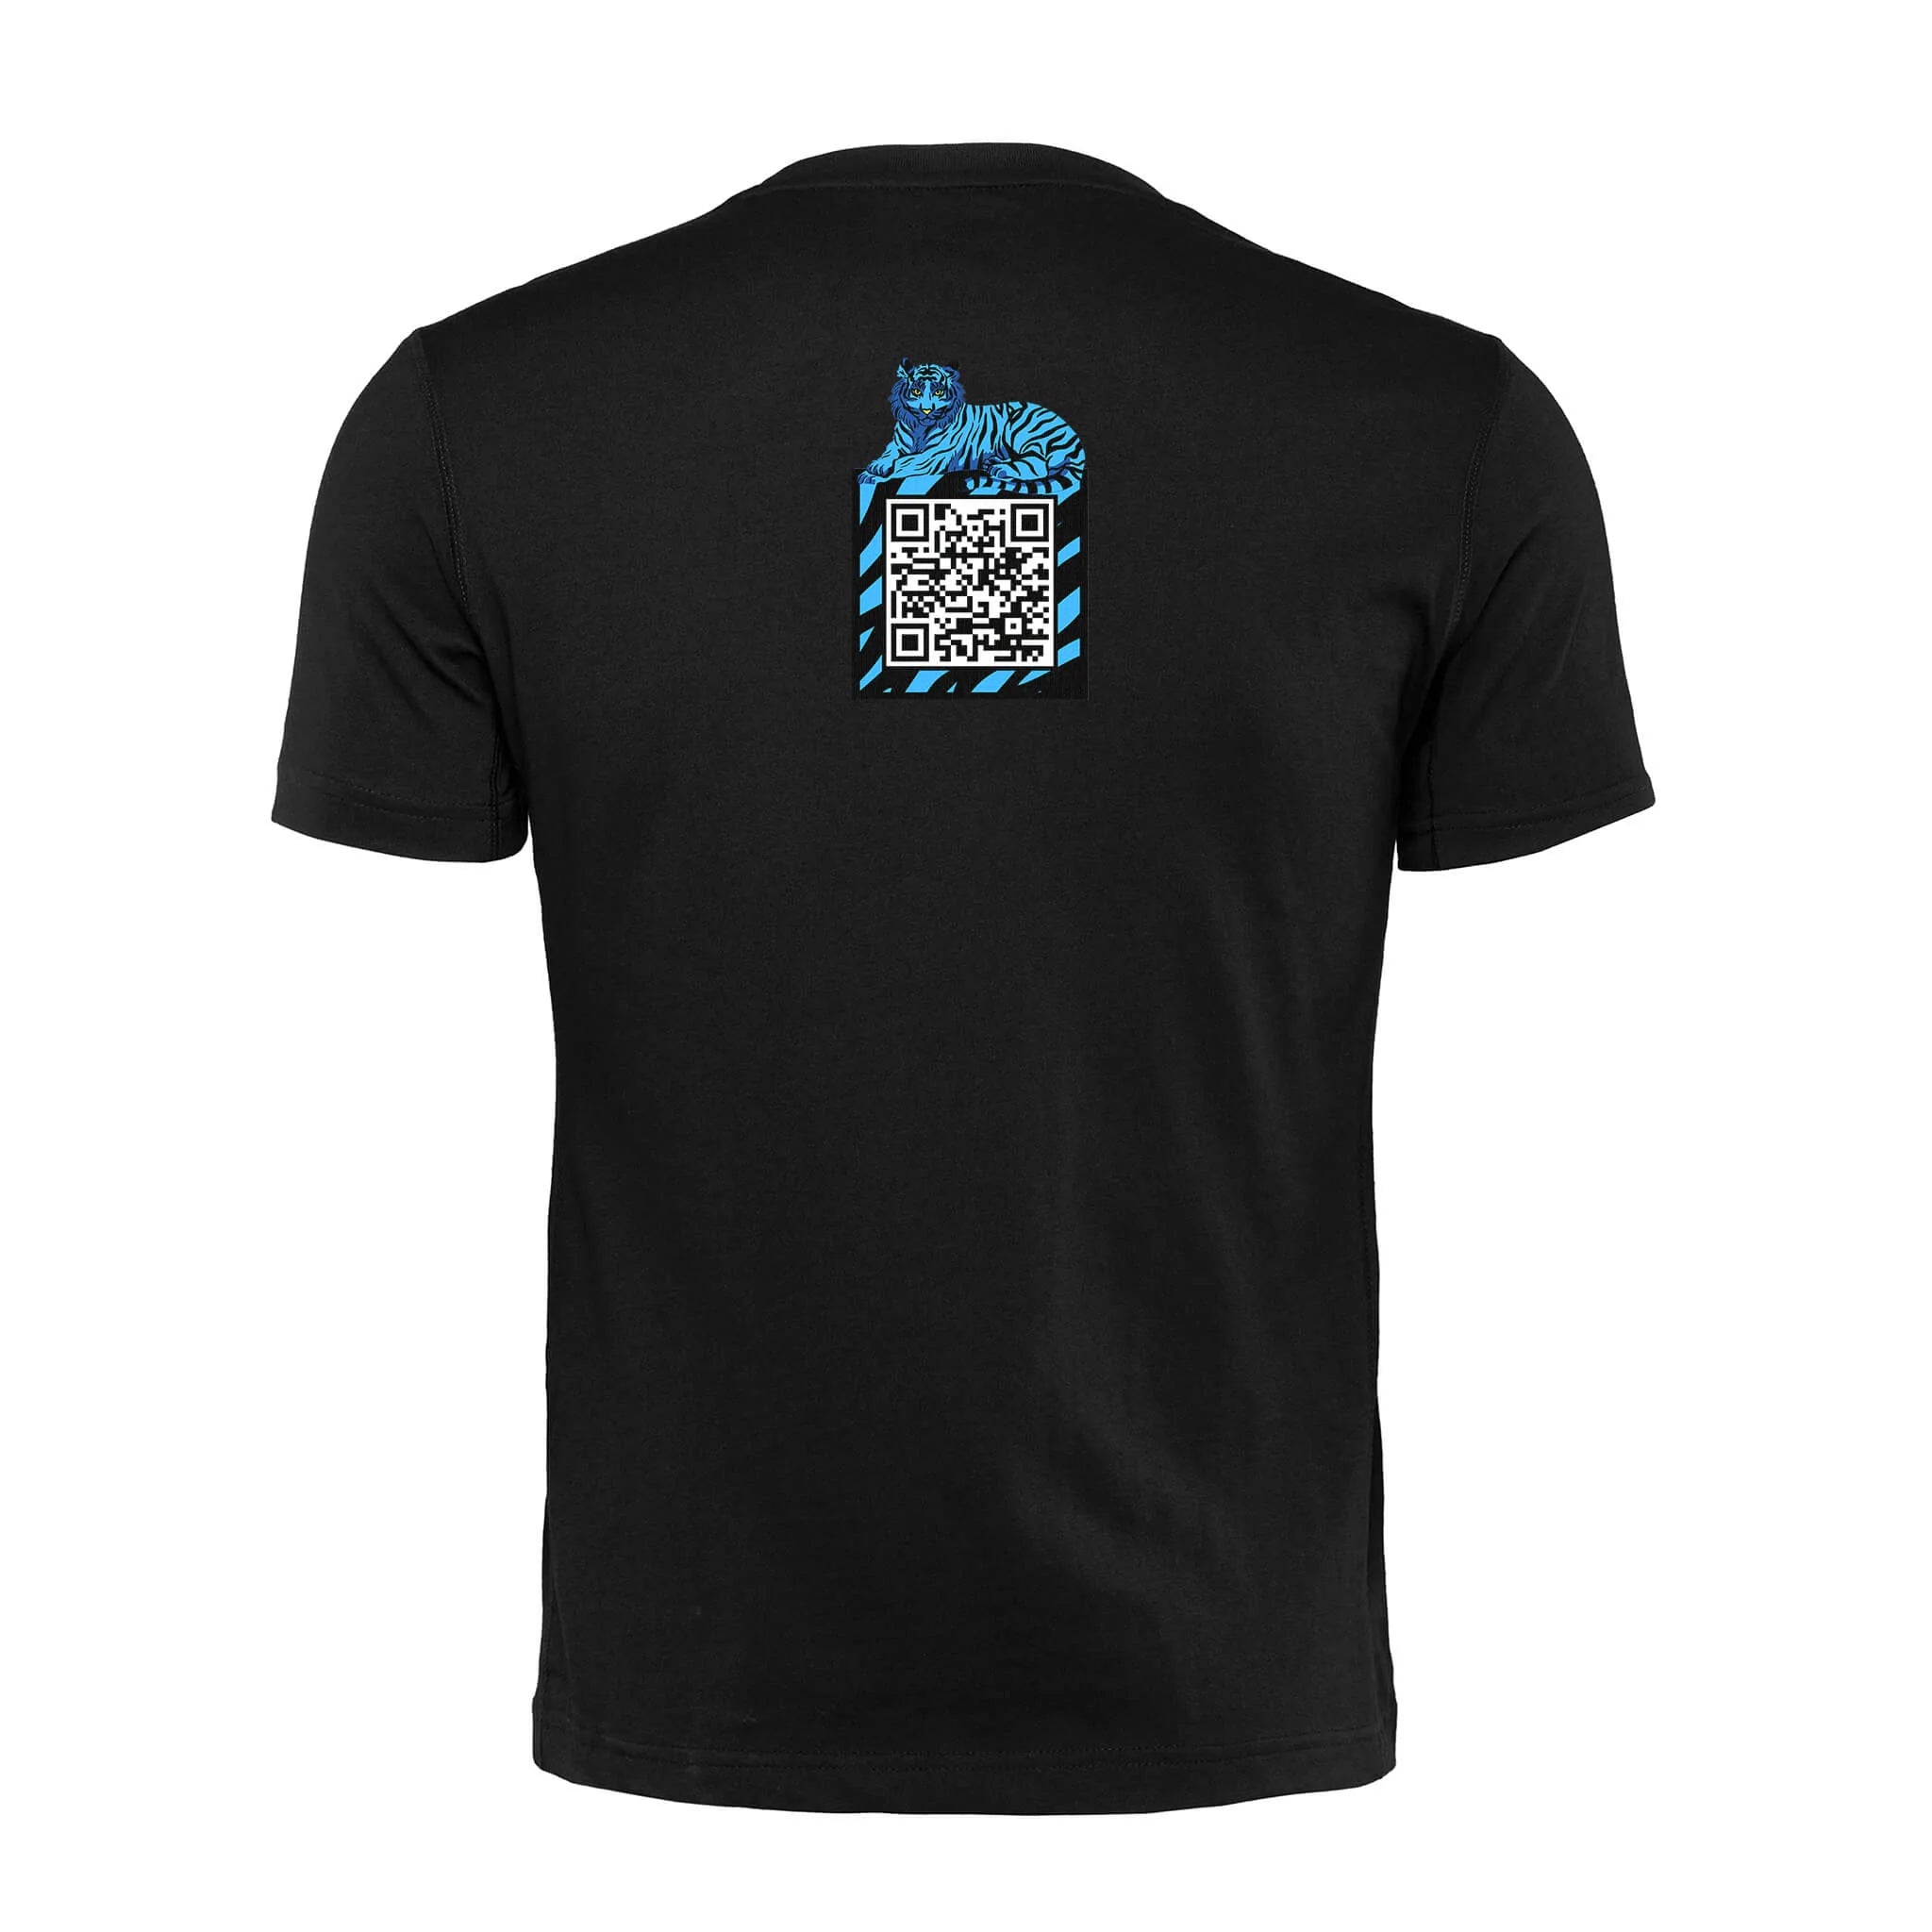 Black QR T-Shirt from RESHRD Savannah collection with Back Black & Light Blue design